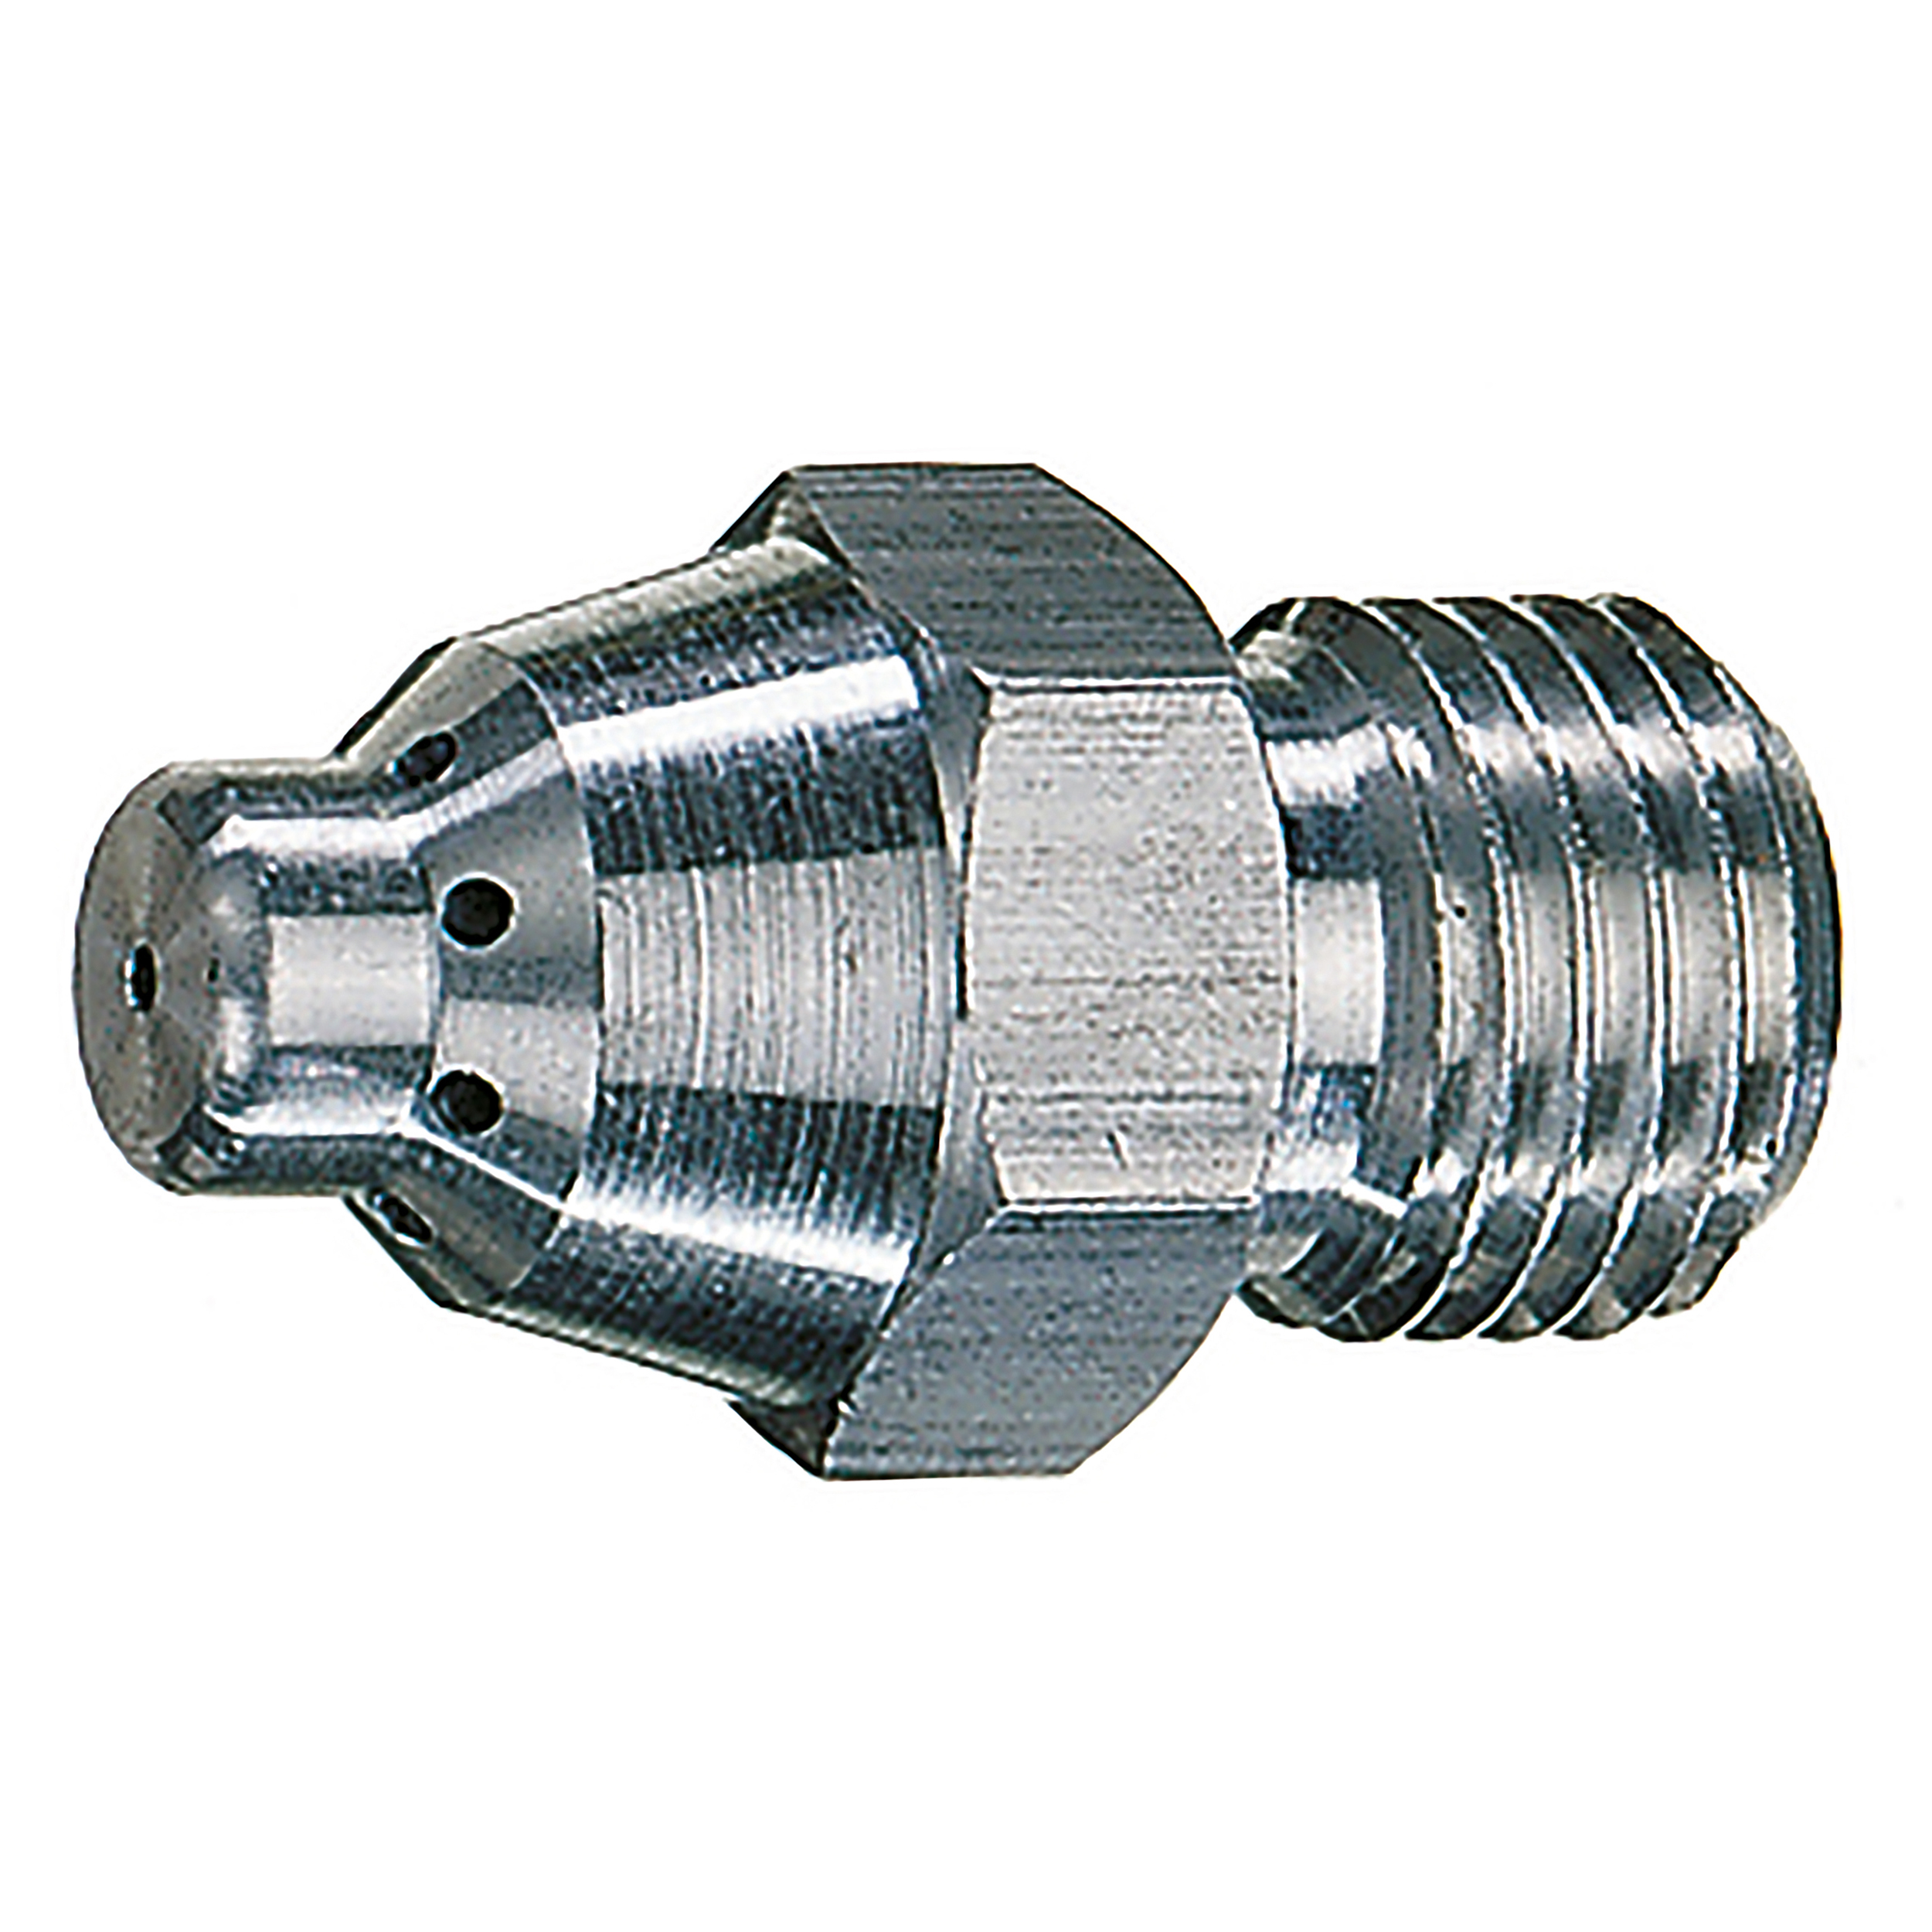 Air-shield nozzle, holes: 9 × Ø1.0 mm, connection thread: M12 × 1.25, sound level < 85 dB(A) at 87 psi/6 bar, aluminium